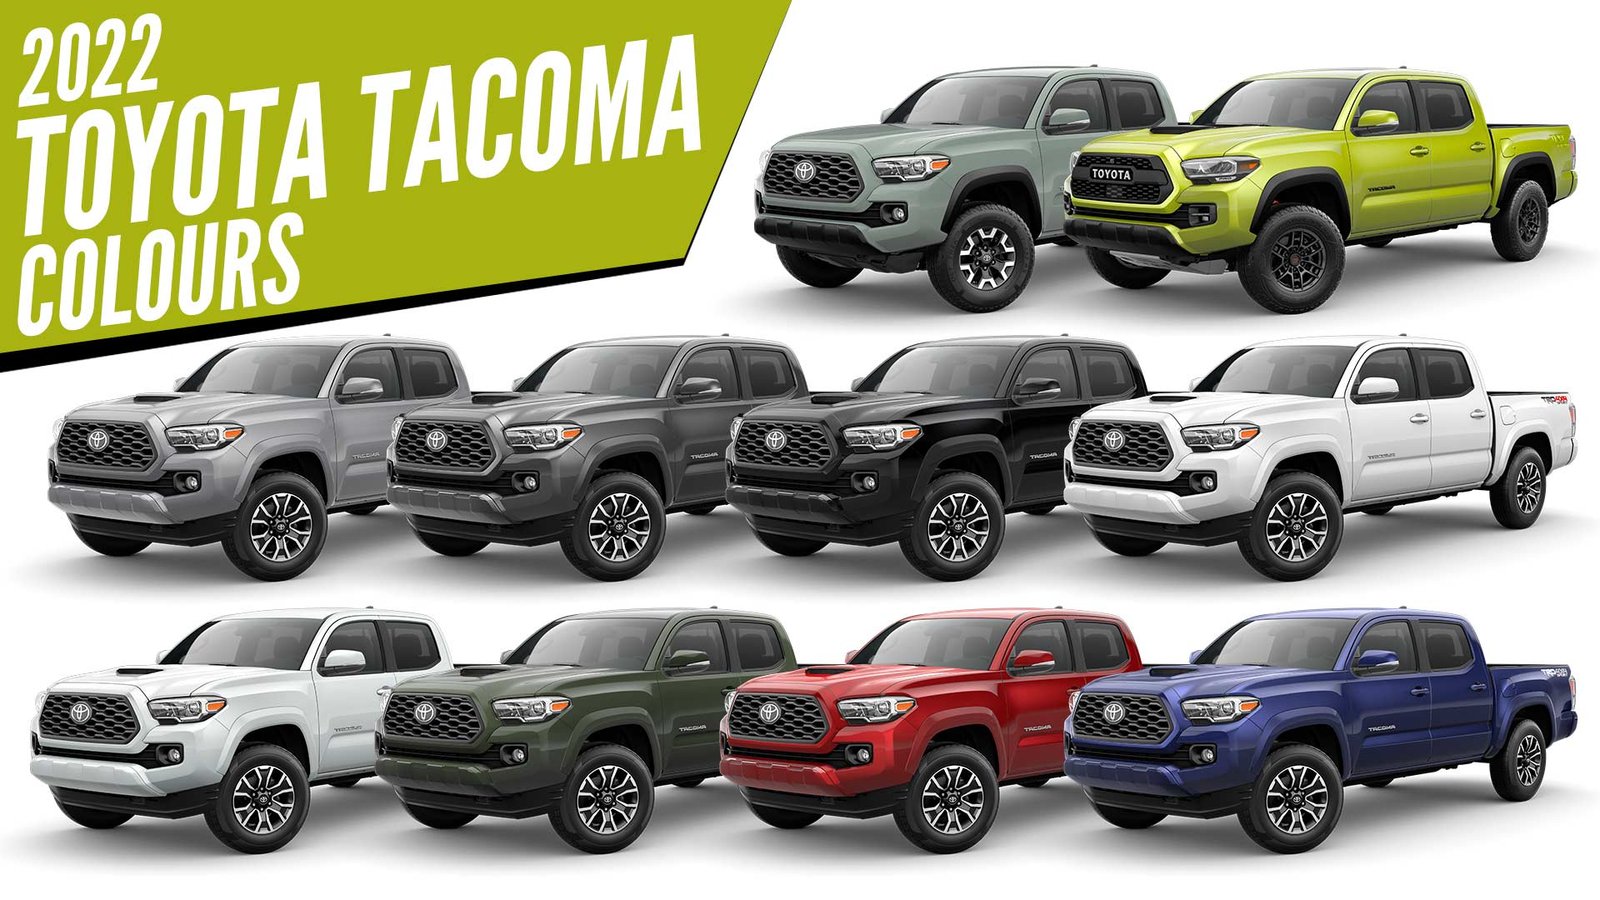 2022 Toyota Tacoma All Color Options Images Autobics